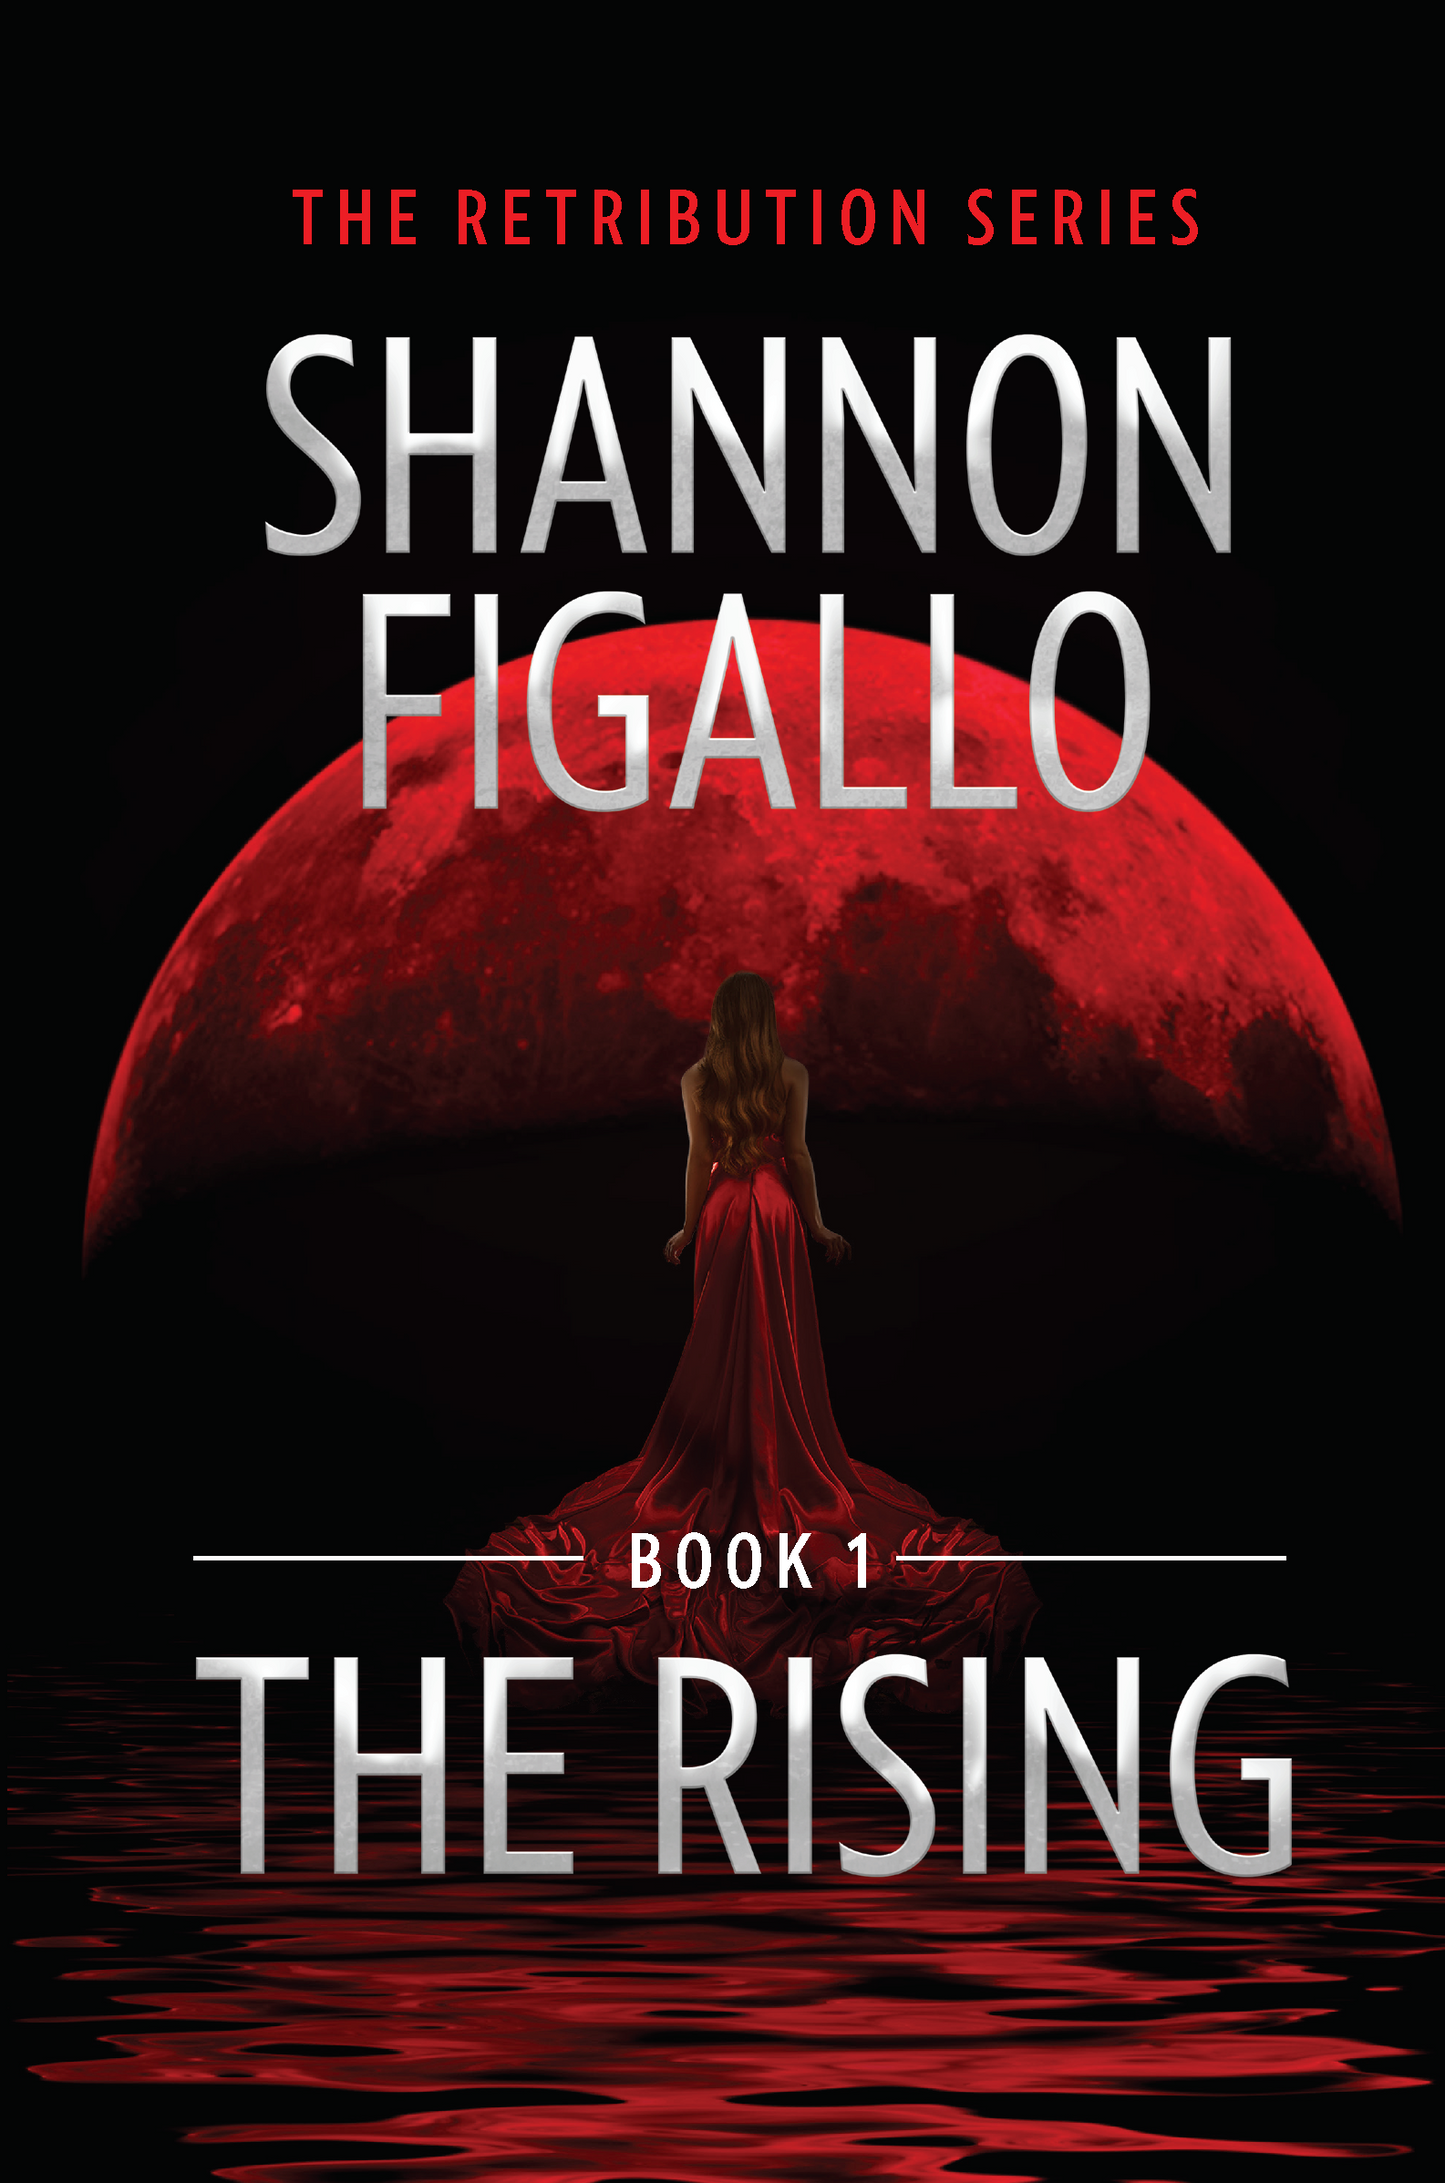 THE RISING - Shannon Figallo